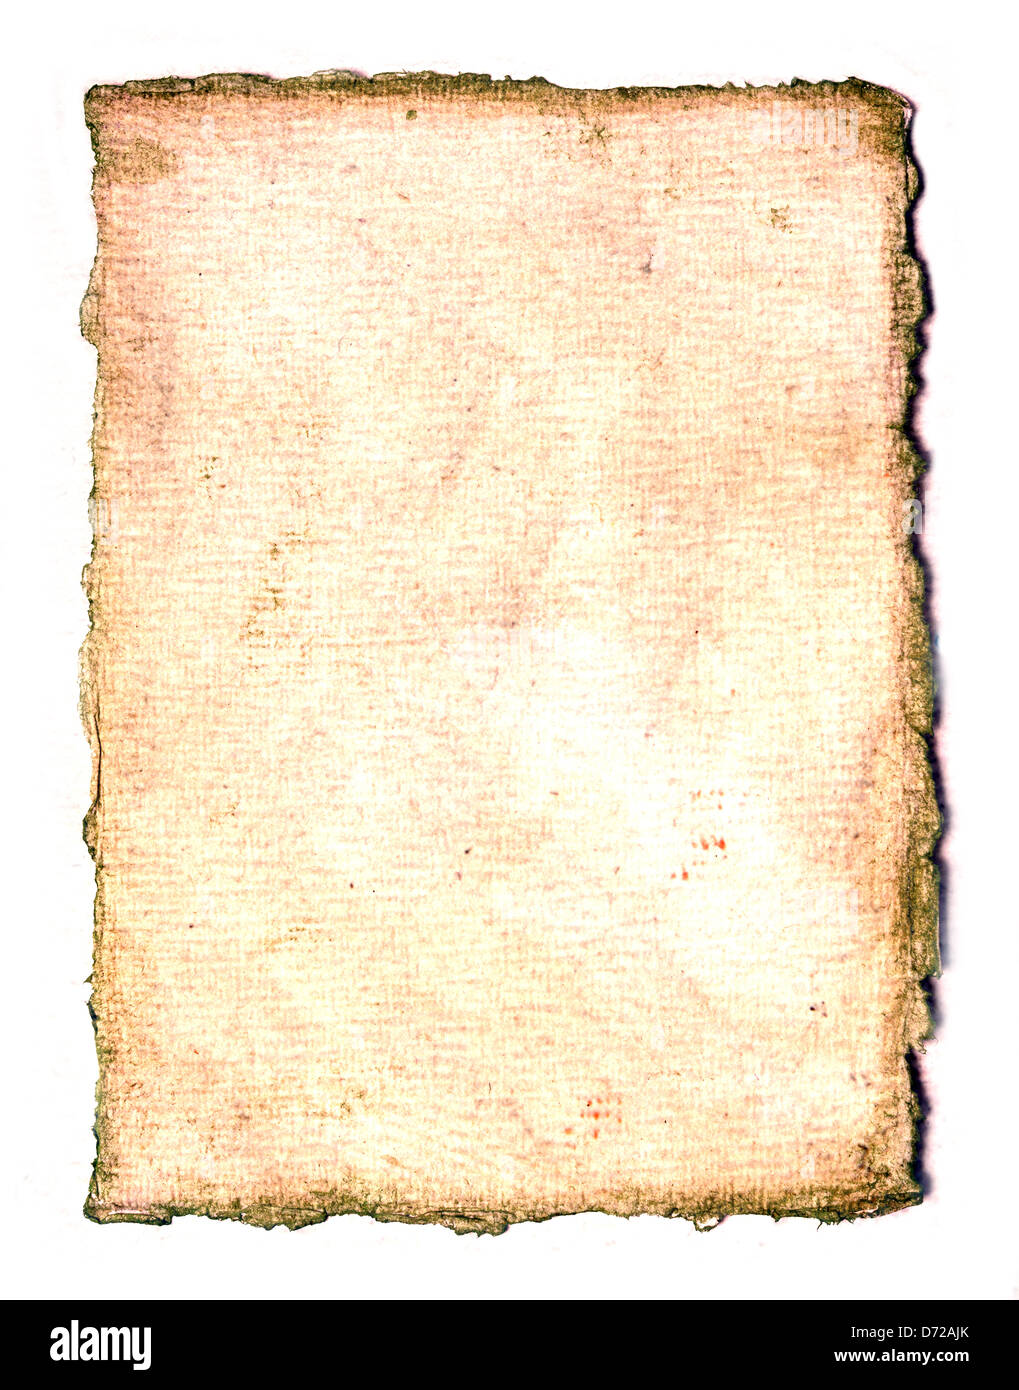 Deckle edged vintage parchment paper roughly textured Stock Photo